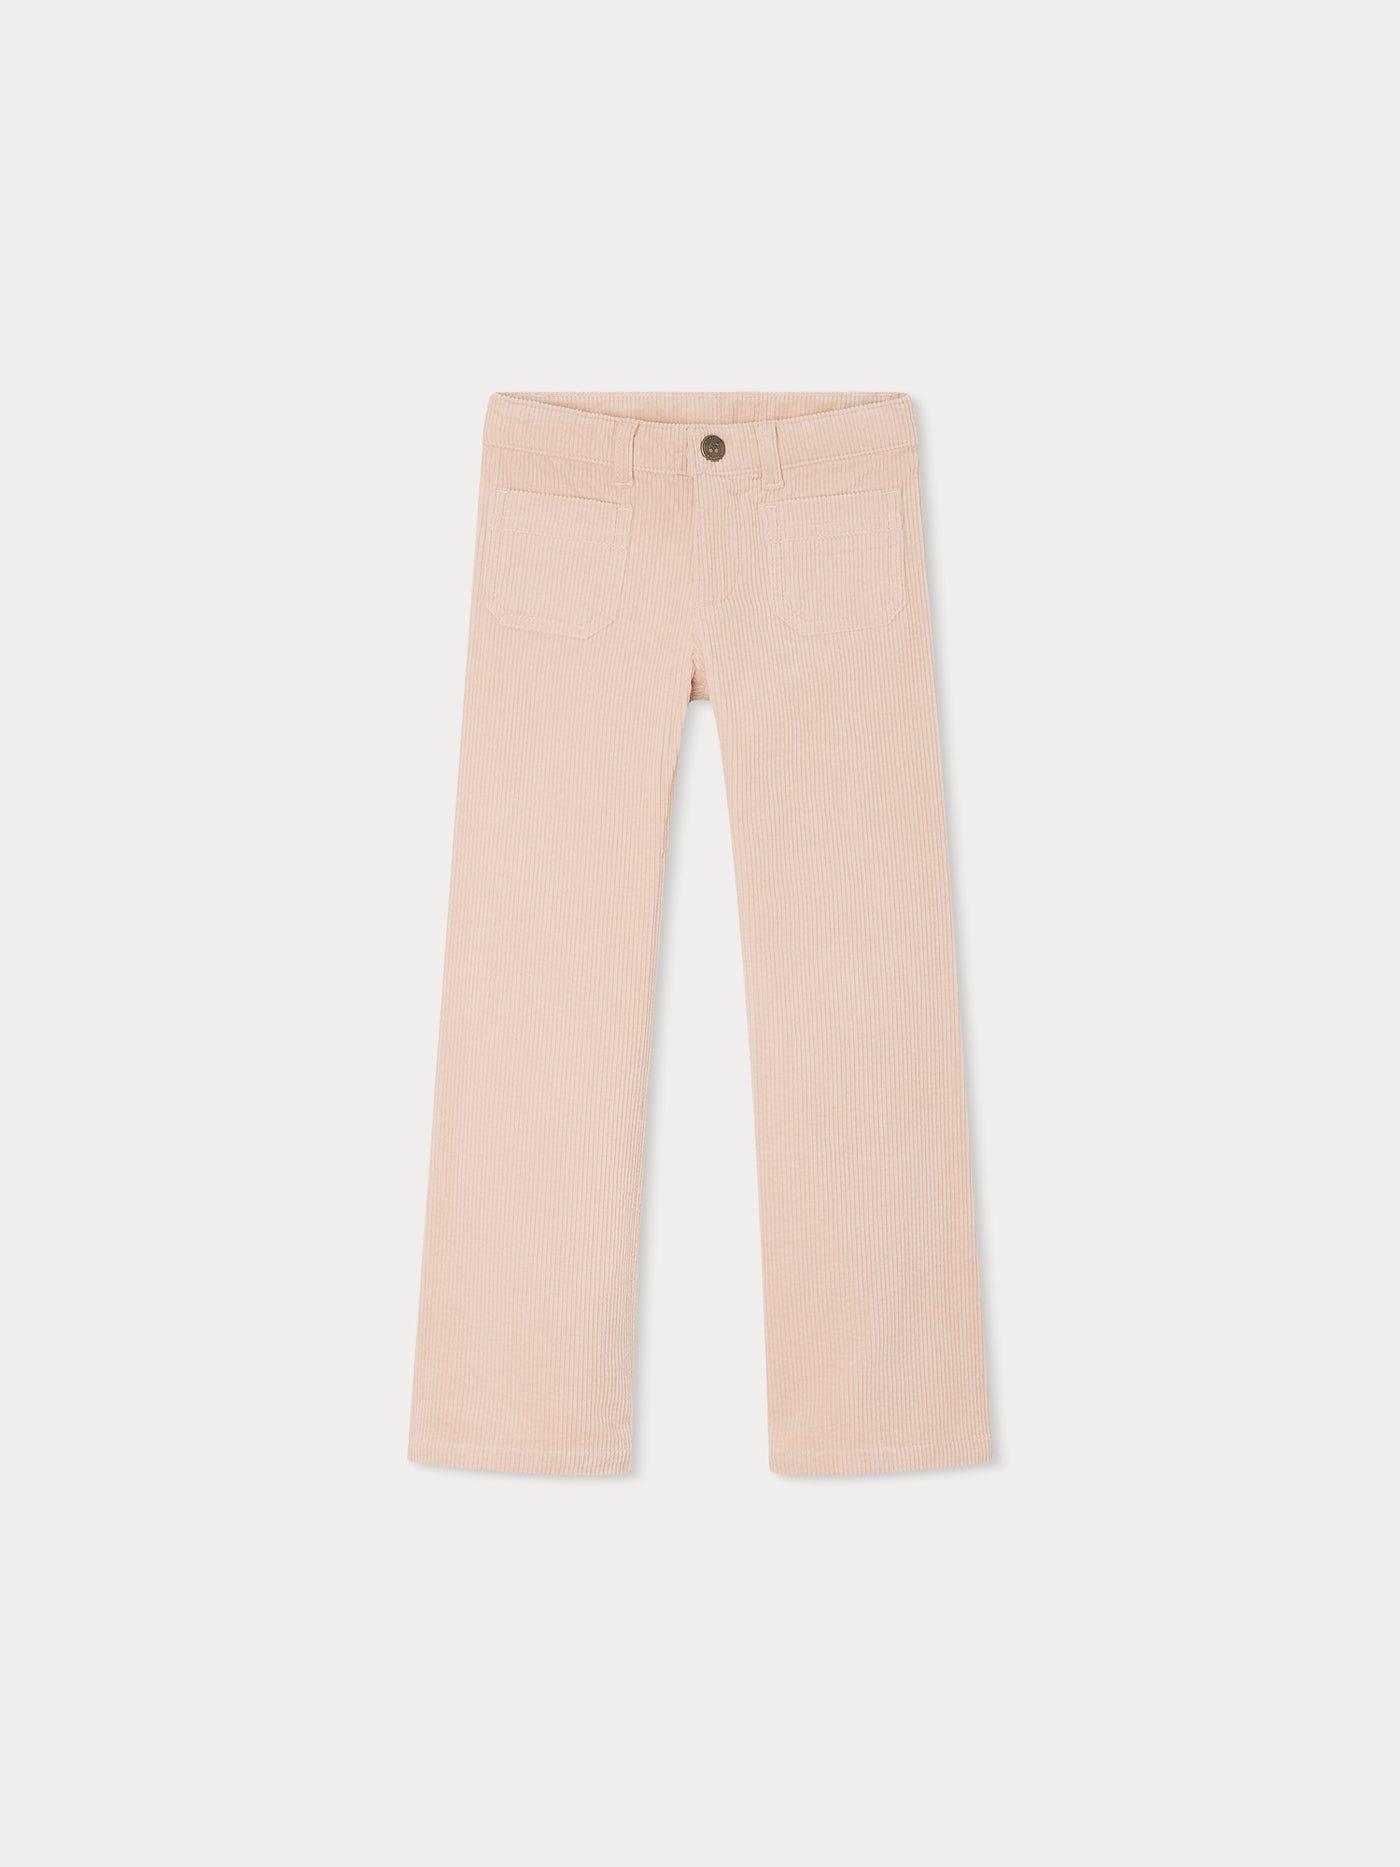 Junon Pants pink blush